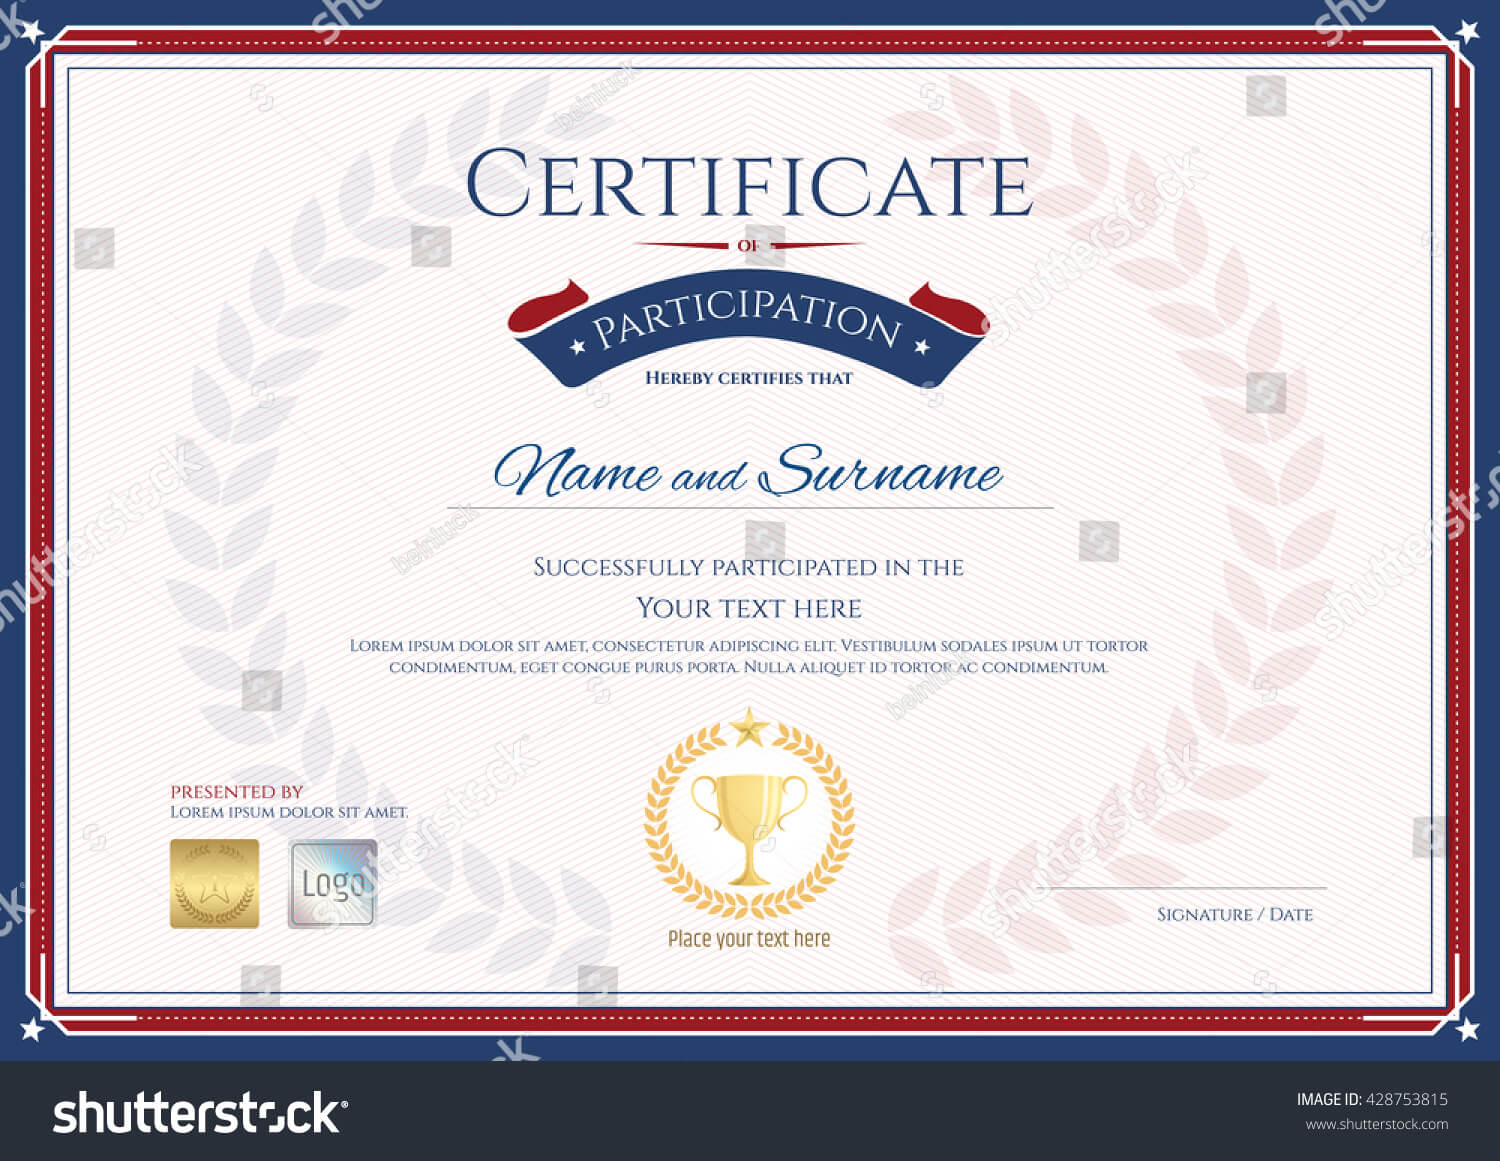 Certificate Participation Template Sport Theme Gold Stock With Certification Of Participation Free Template